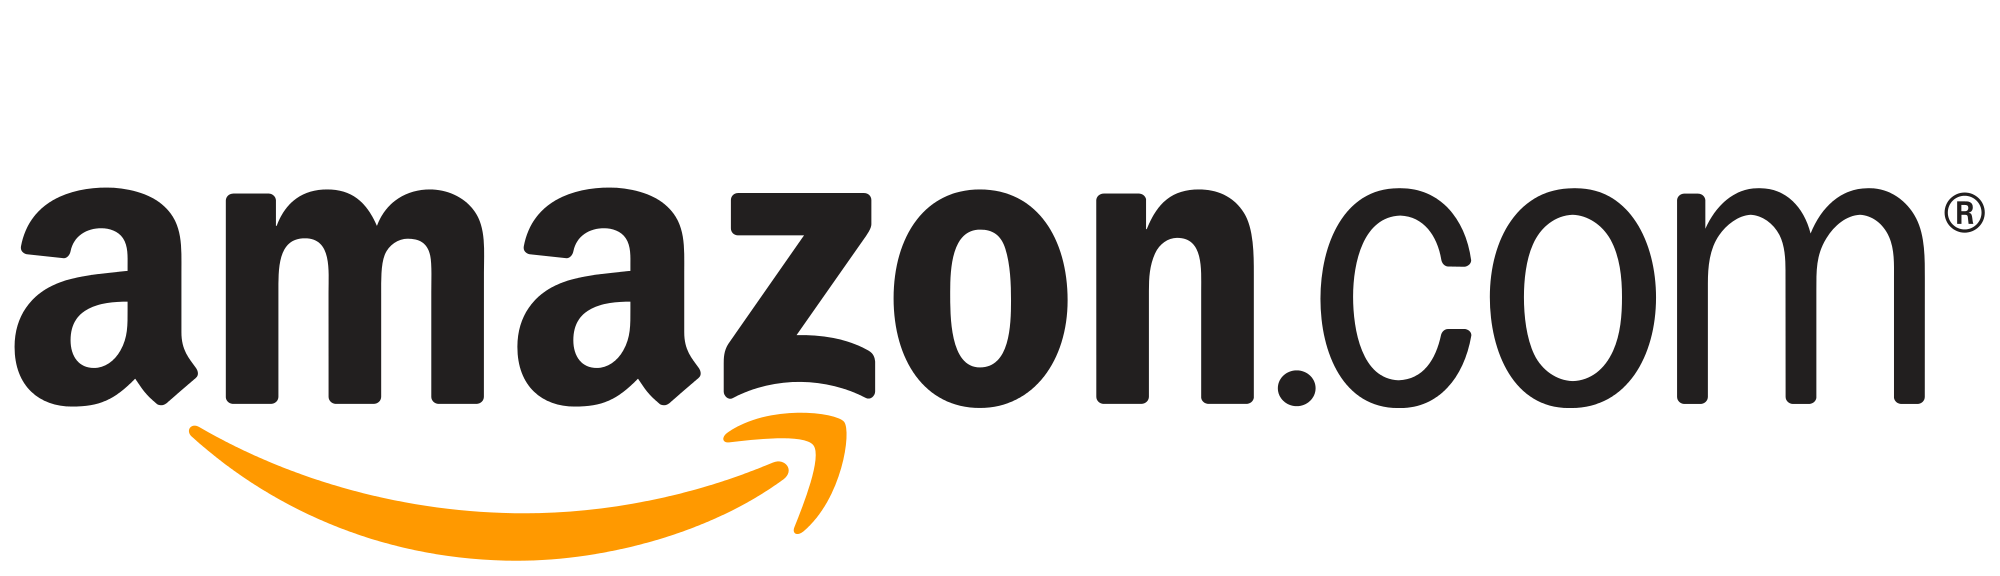 Amazon.com-Logo.svg-1 copy.png